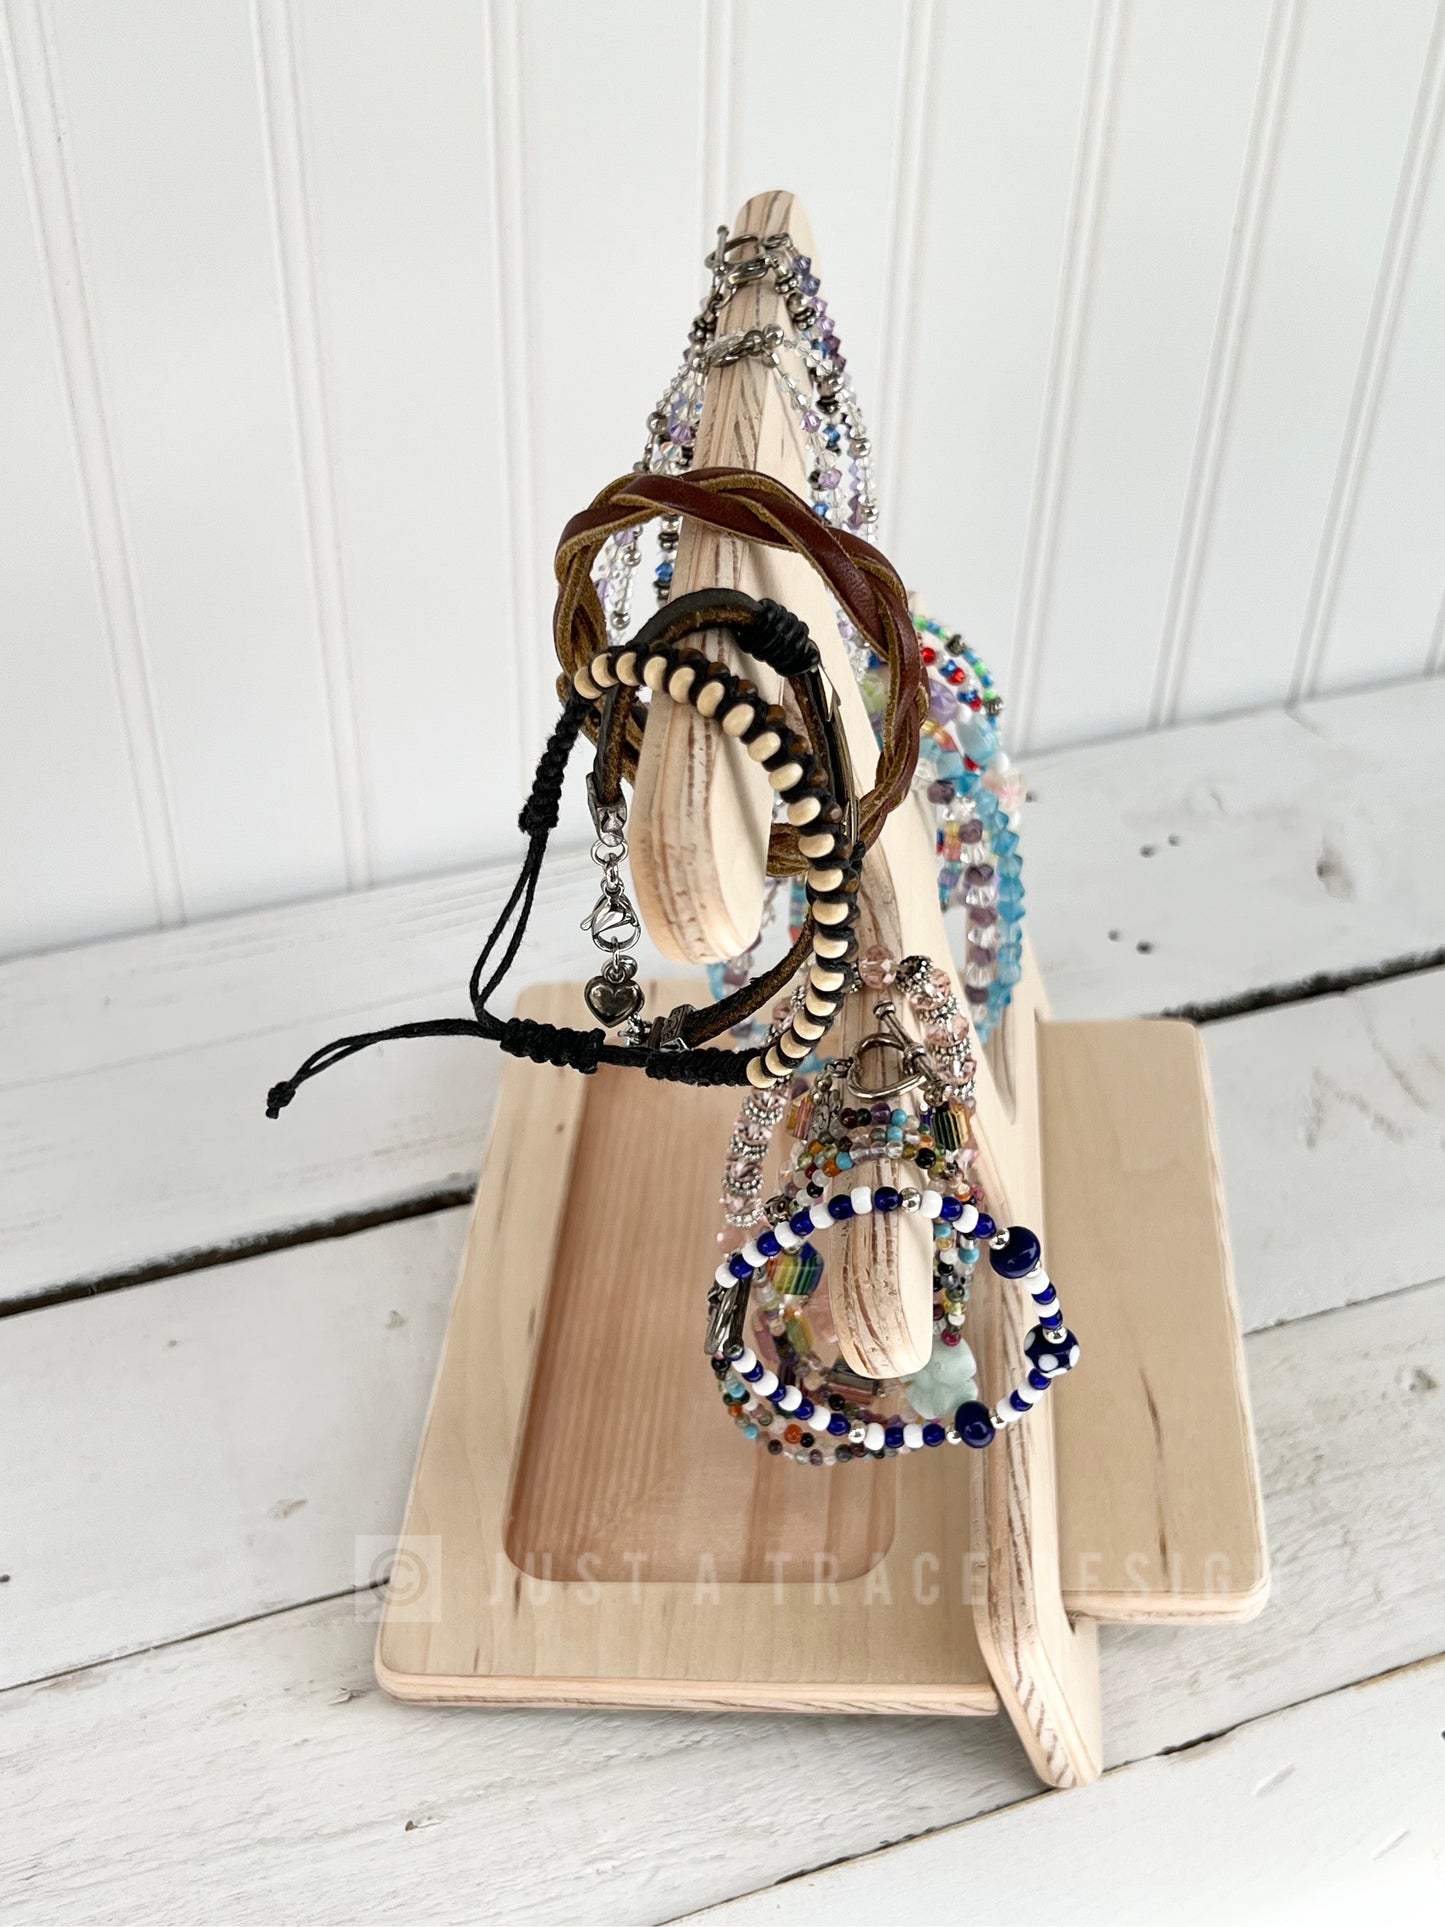 Collapsible Wooden Bracelet or Hair Scrunchie Display Stand , 2 Tier Display Stand, Vendor Display, Craft Show Display, Friendship Bracelet